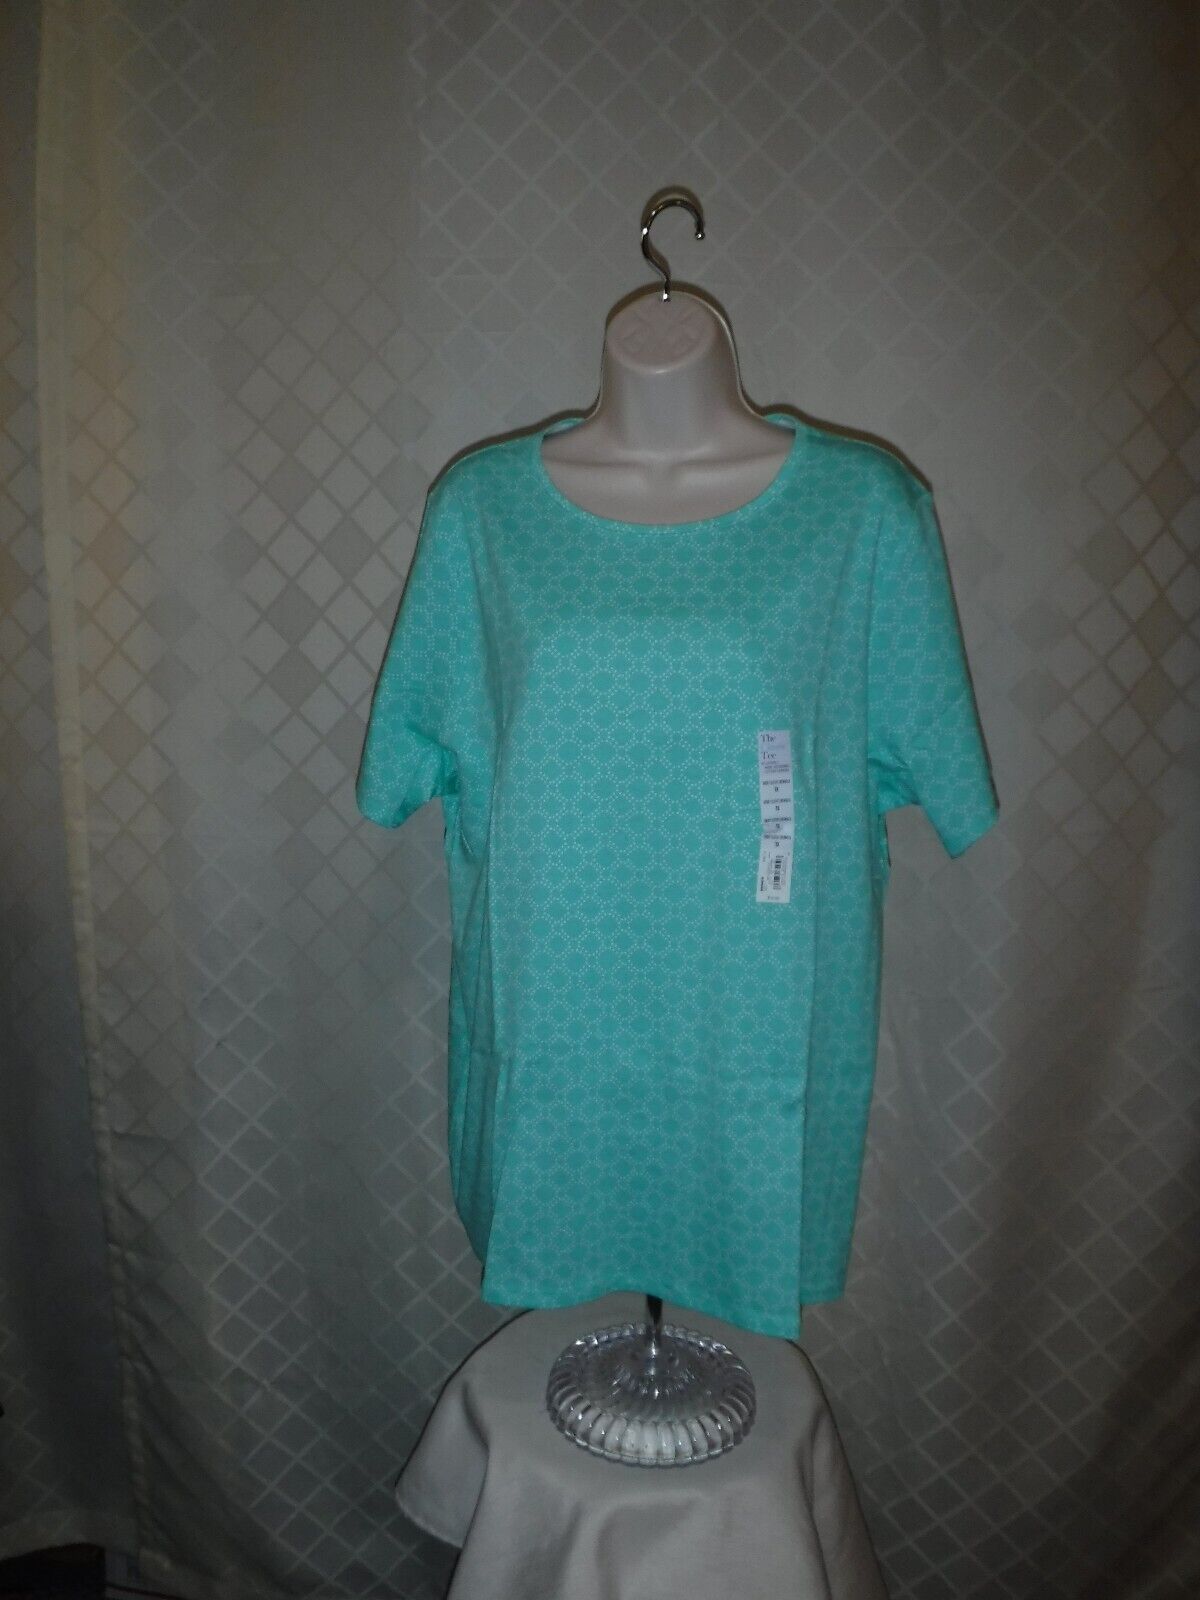 Size Plus Short Sleeve Women's T-Shirts ,3X,2X,1X,0X,Croft & Barrow Multi Color